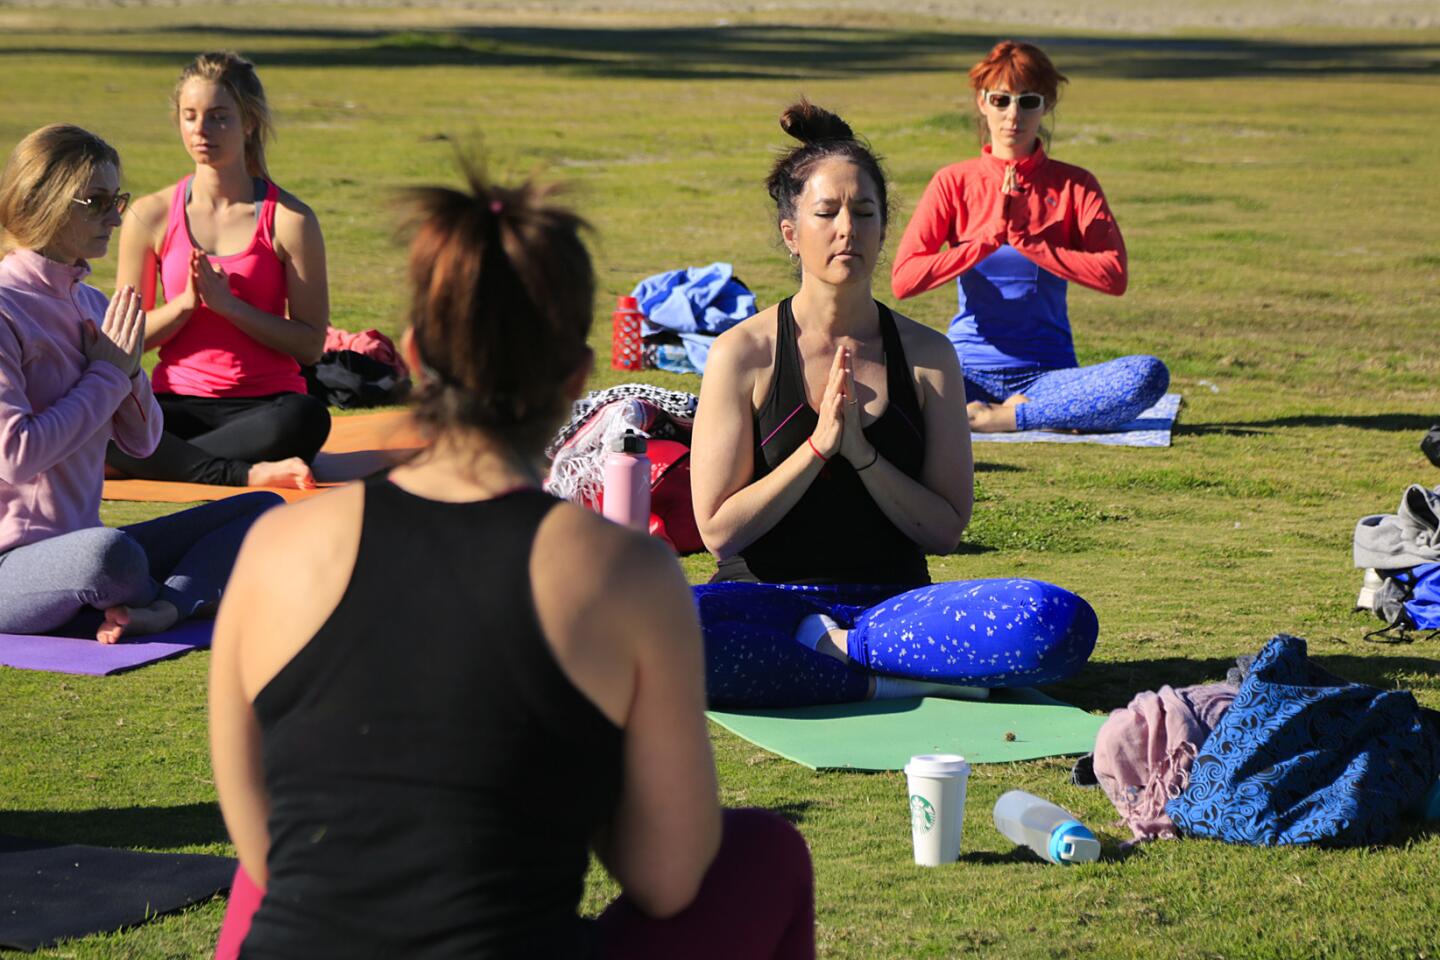 Yoga festival draws hundreds to Ocean Beach - The San Diego Union-Tribune